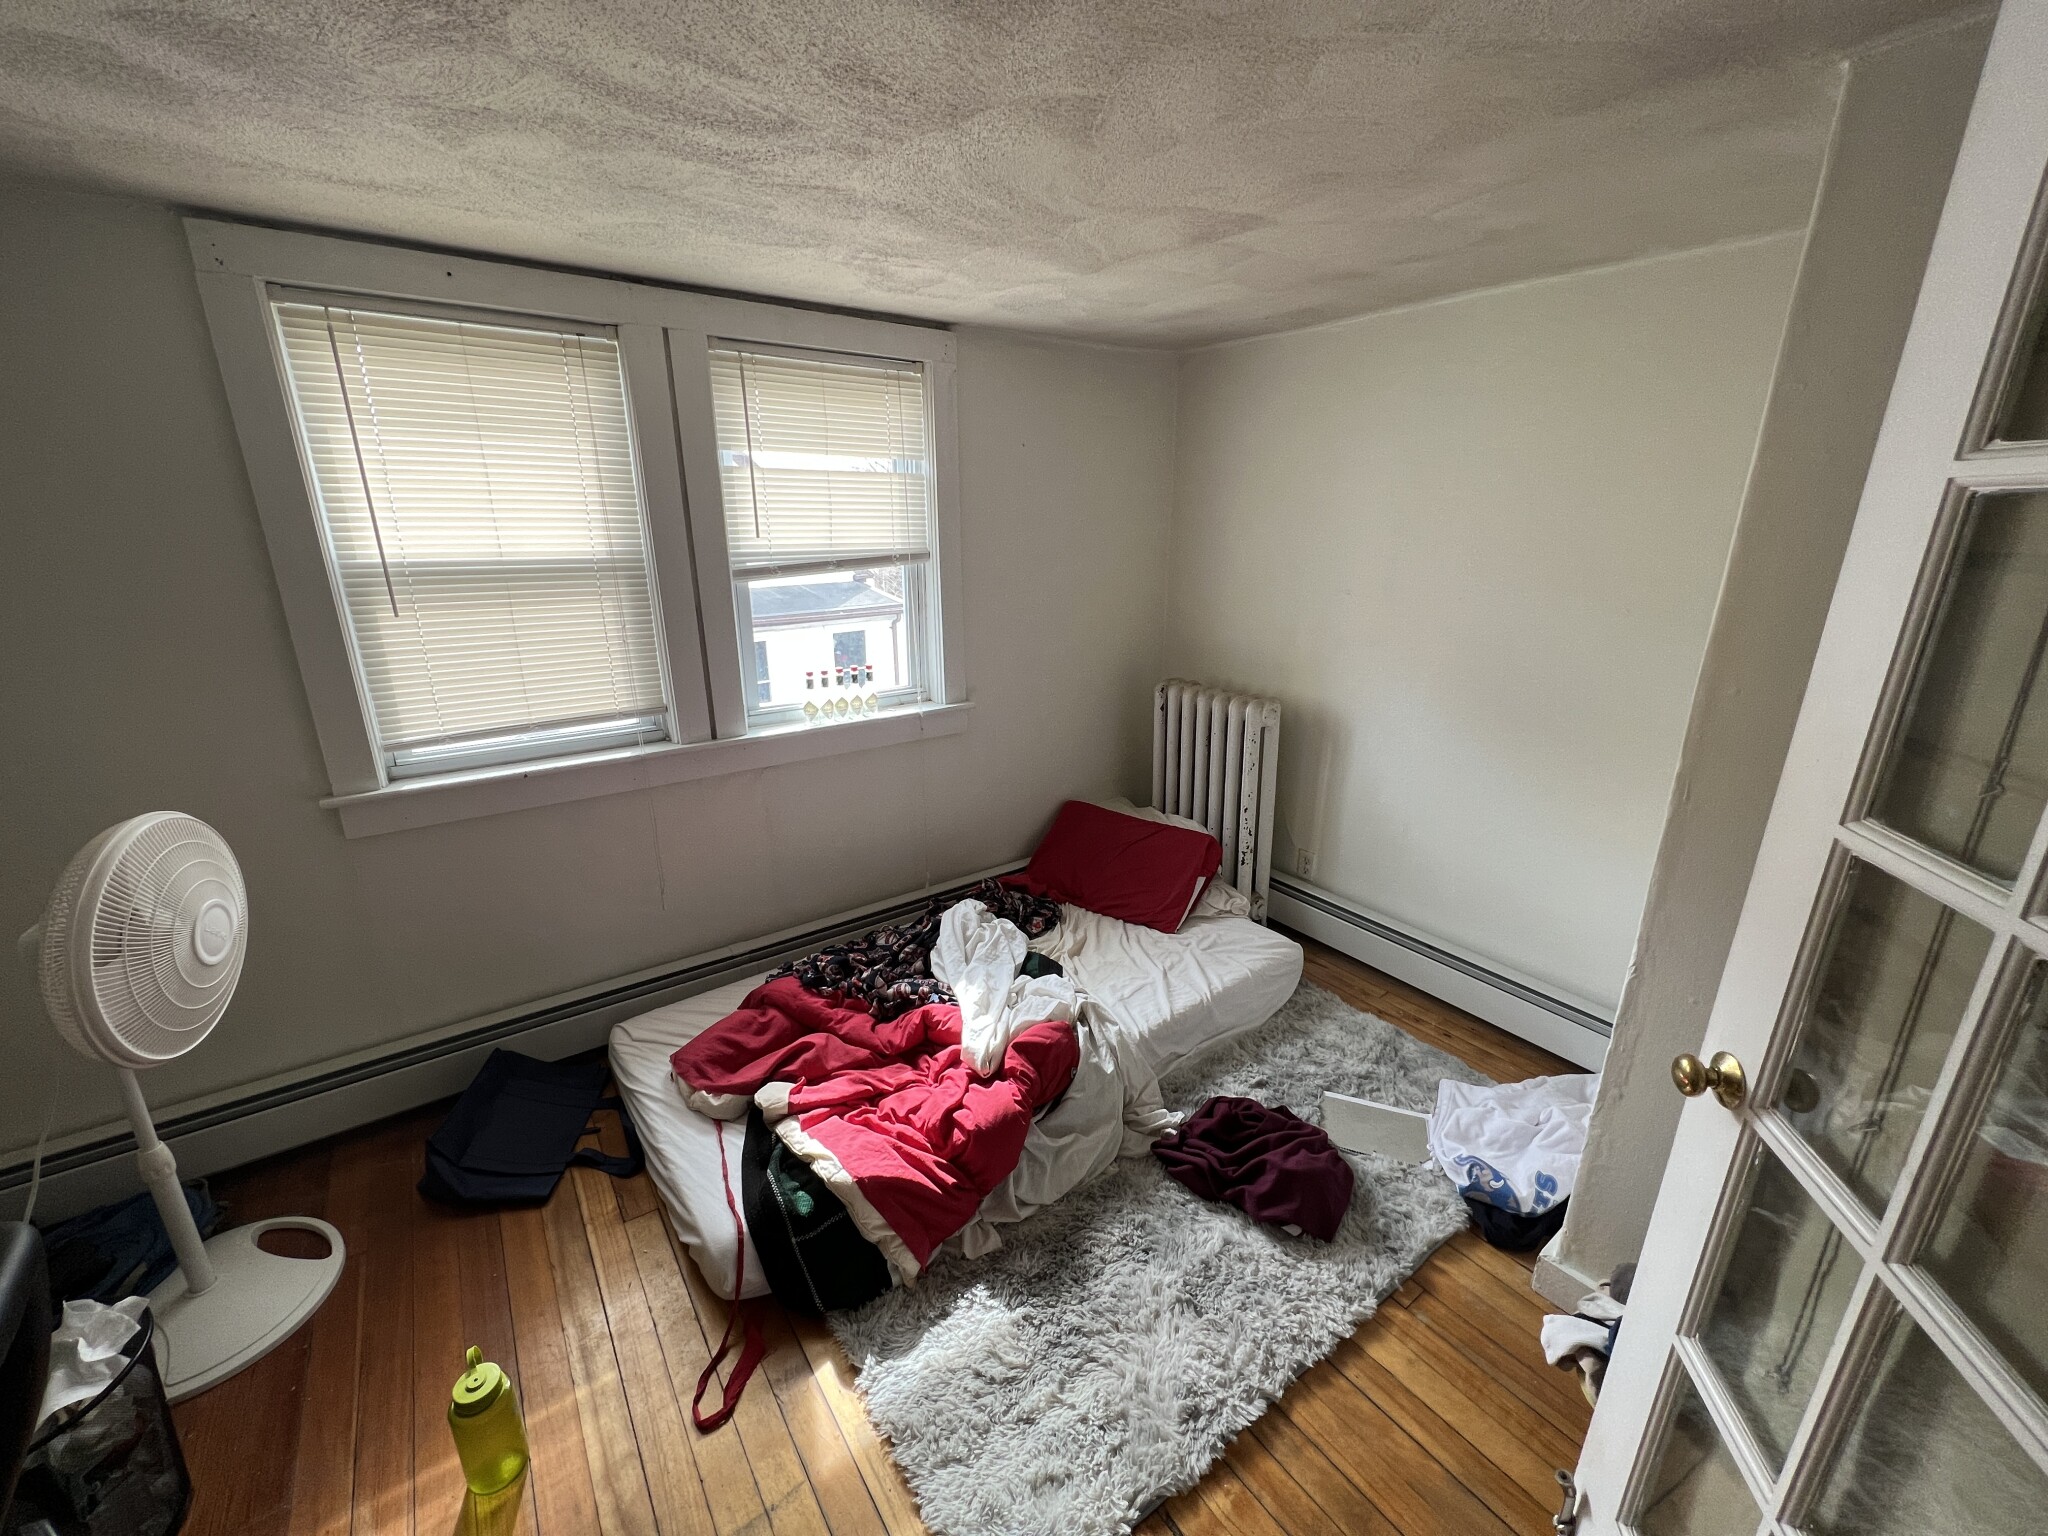 Photos of apartment on Burnham St.,Somerville MA 02143